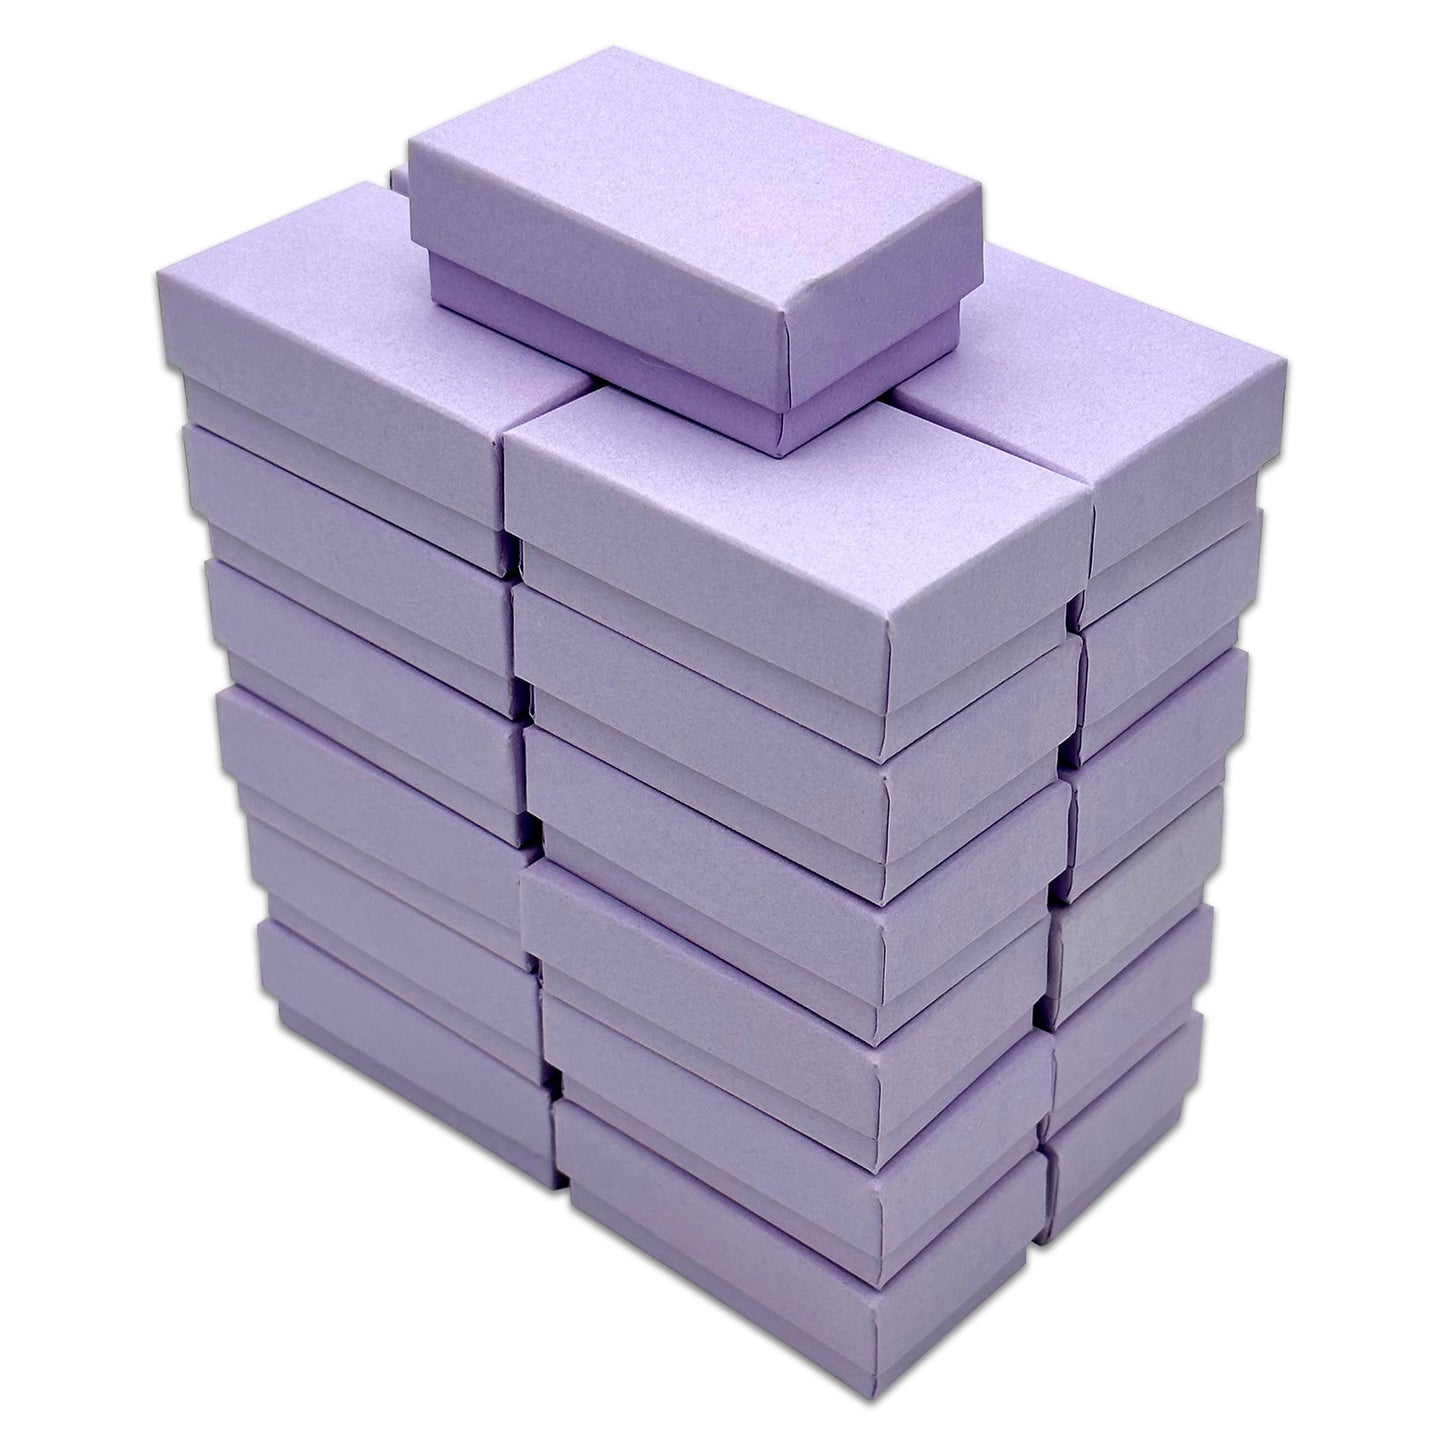 2 5/8" x 1 5/8" x 1" Light Lavender Cotton Filled Paper Box (25-Pack)